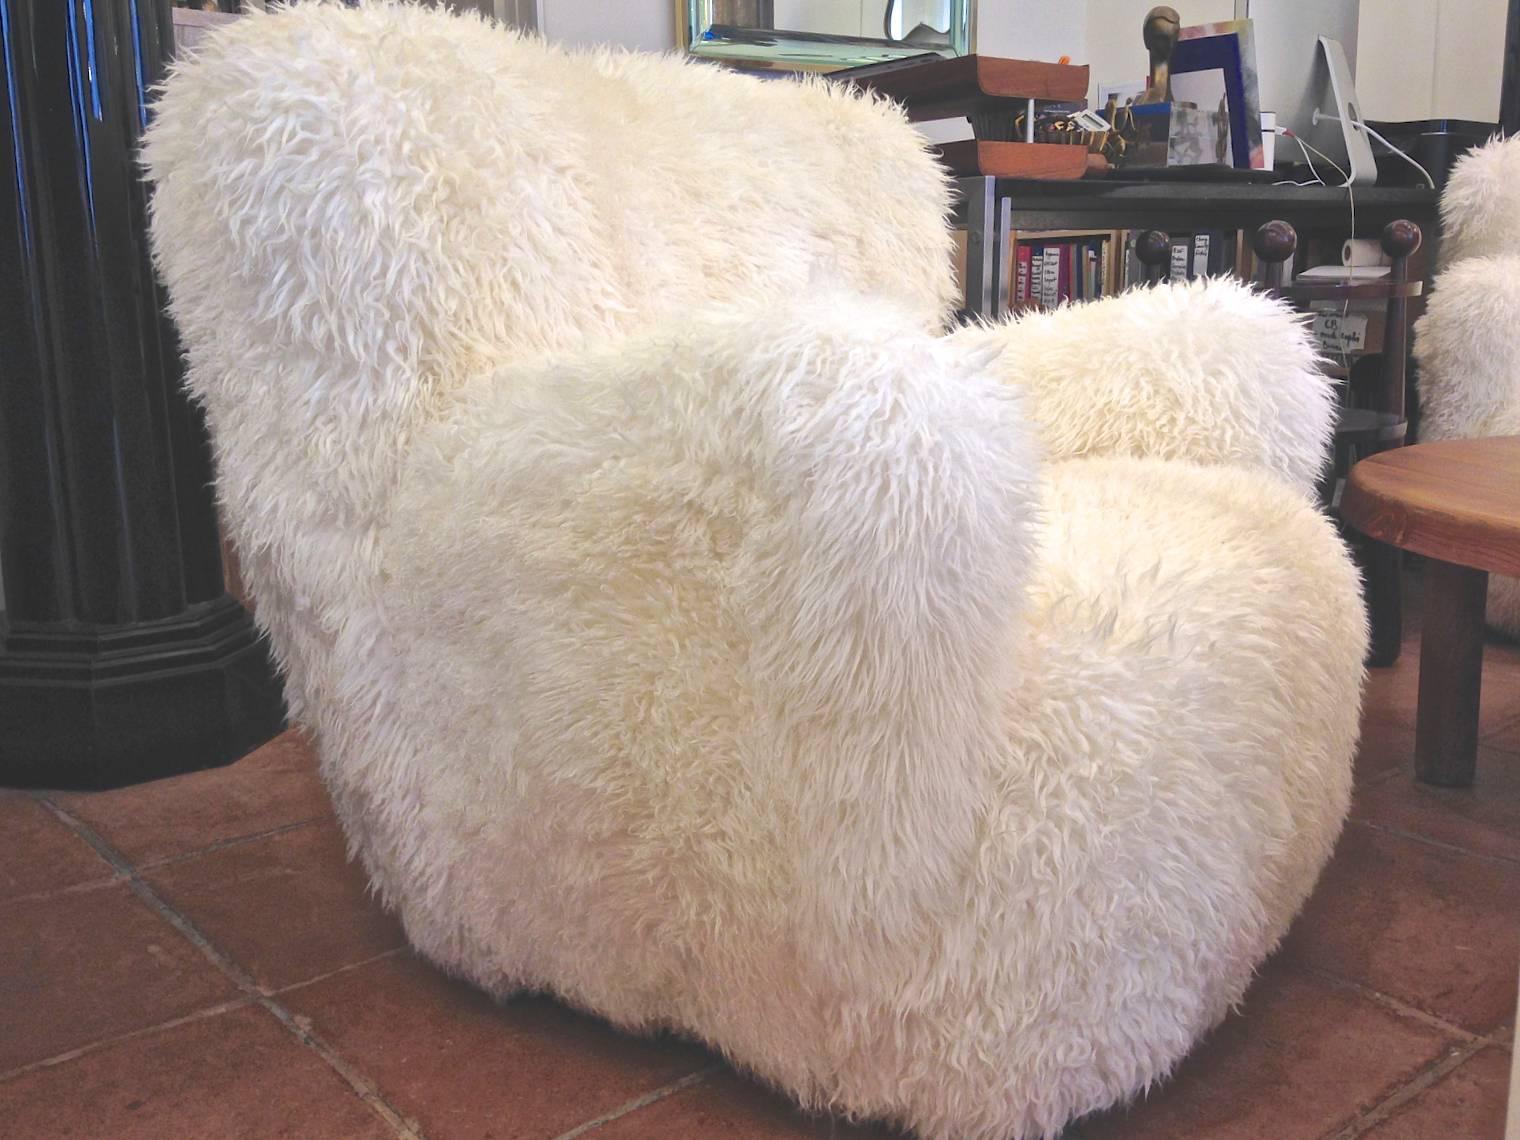 Sheepskin Viggo Boesen Pair of Hairy Club Chairs Covered in Sheep Skin Fur For Sale